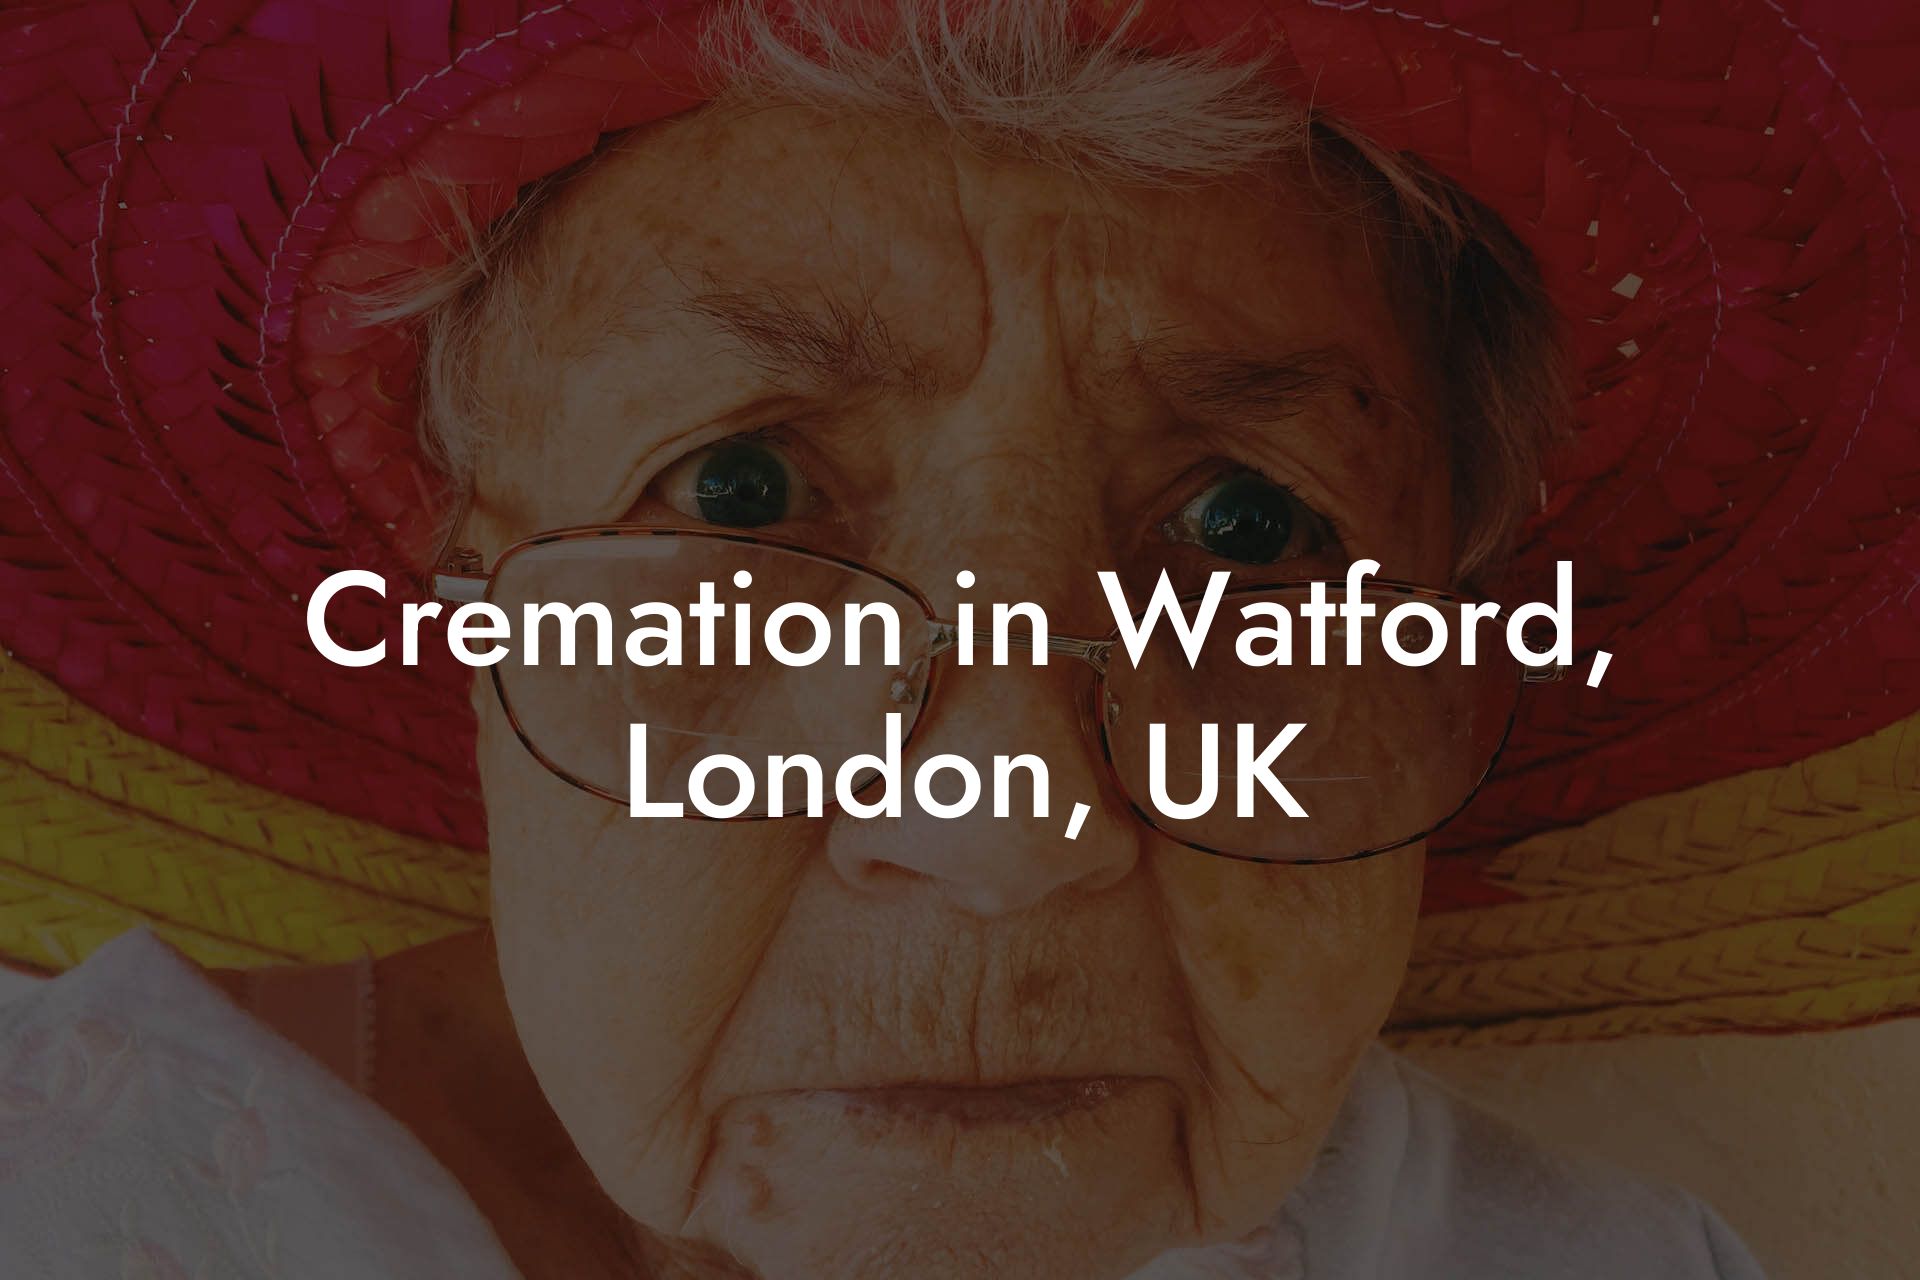 Cremation in Watford, London, UK